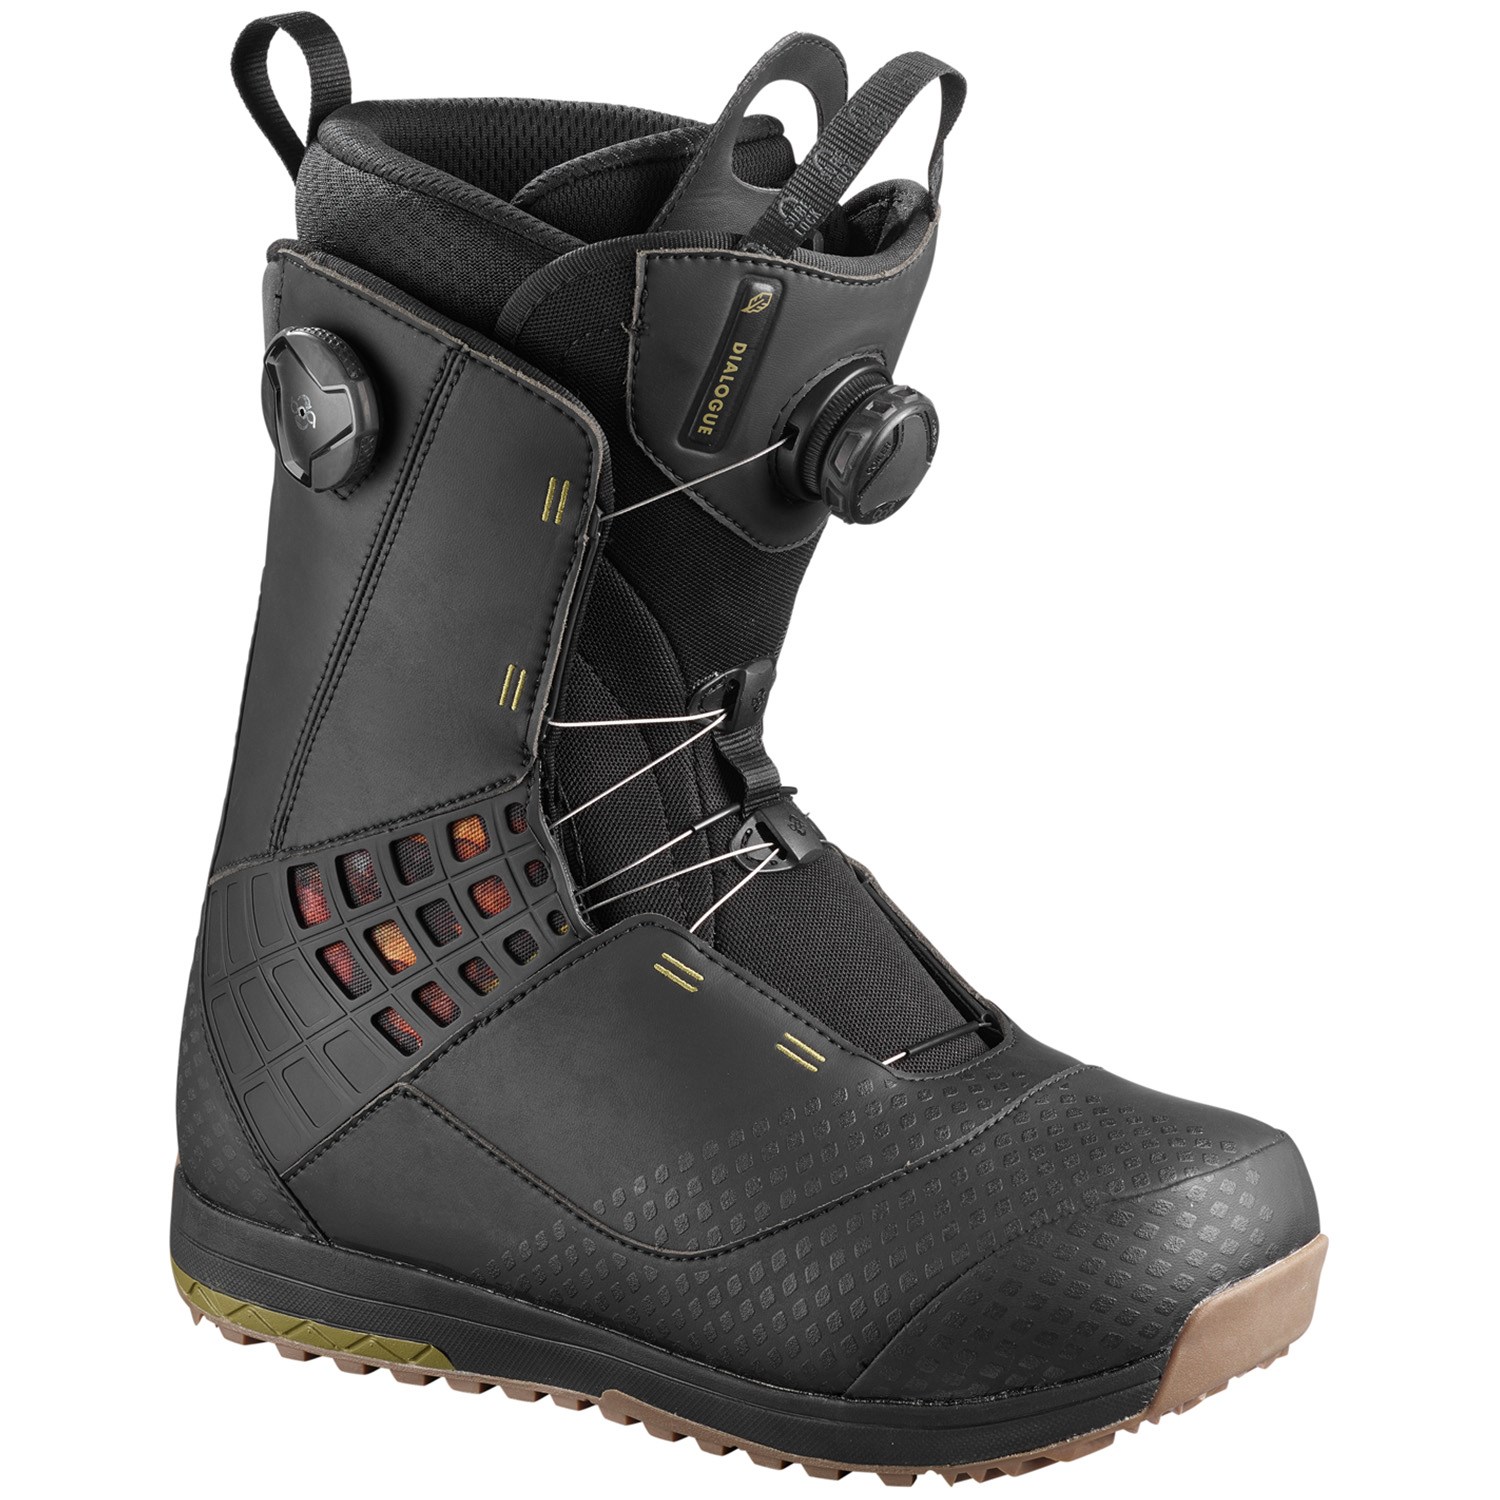 salomon xpro 110 ski boots